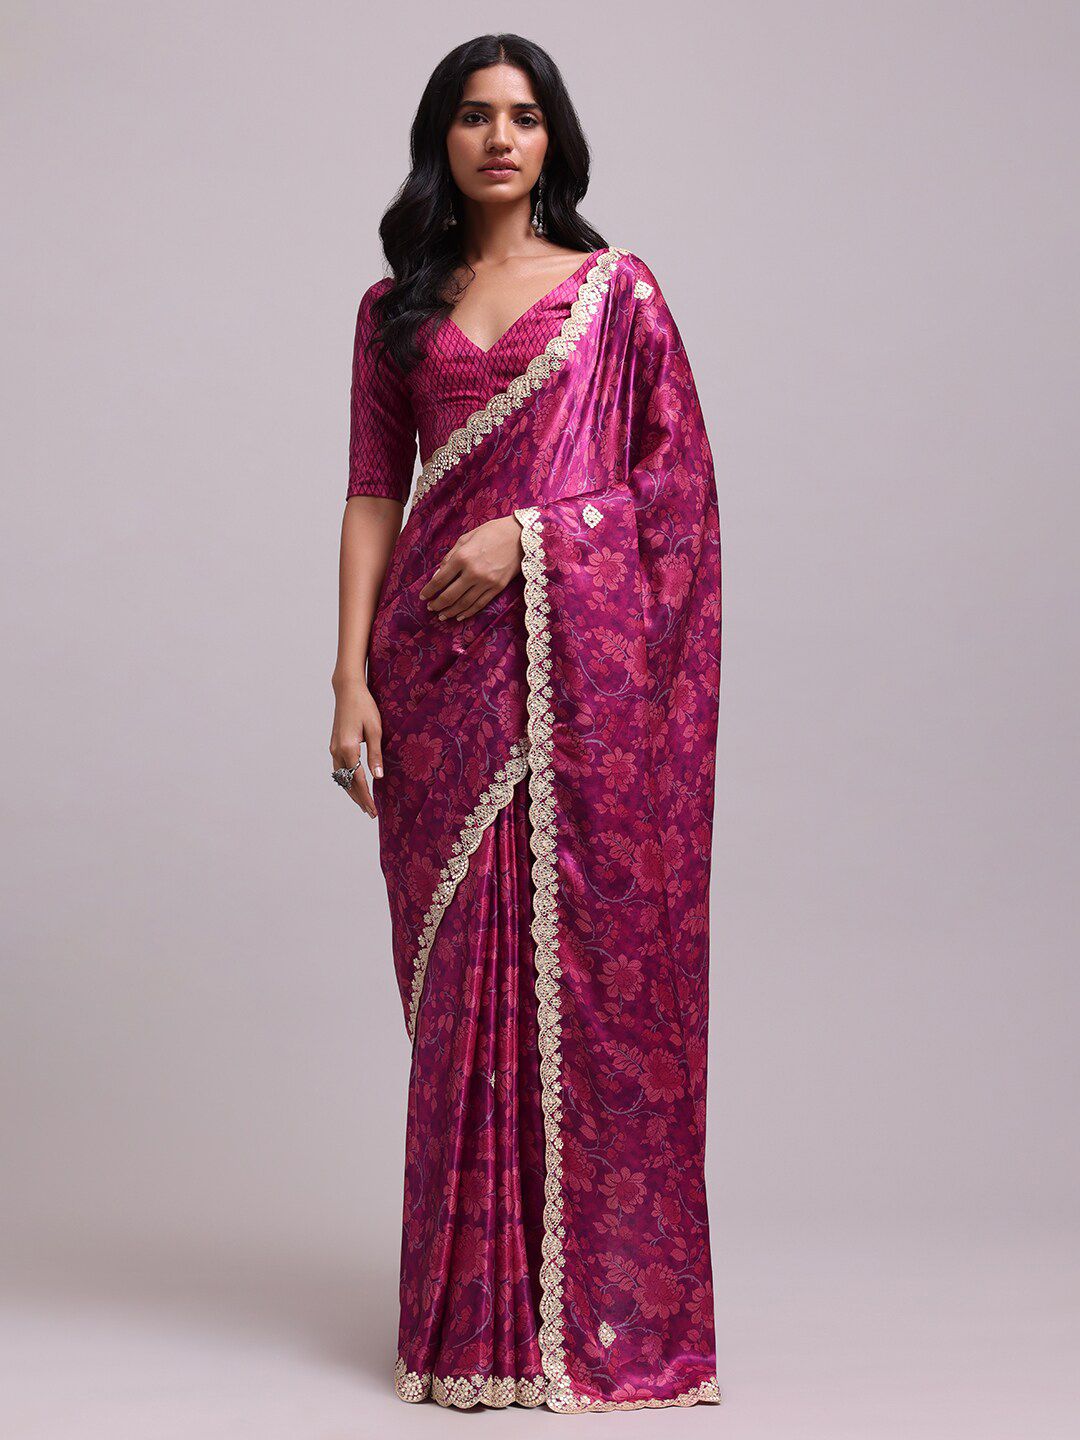 KALKI Fashion Floral Beads and Stones Saree Price in India